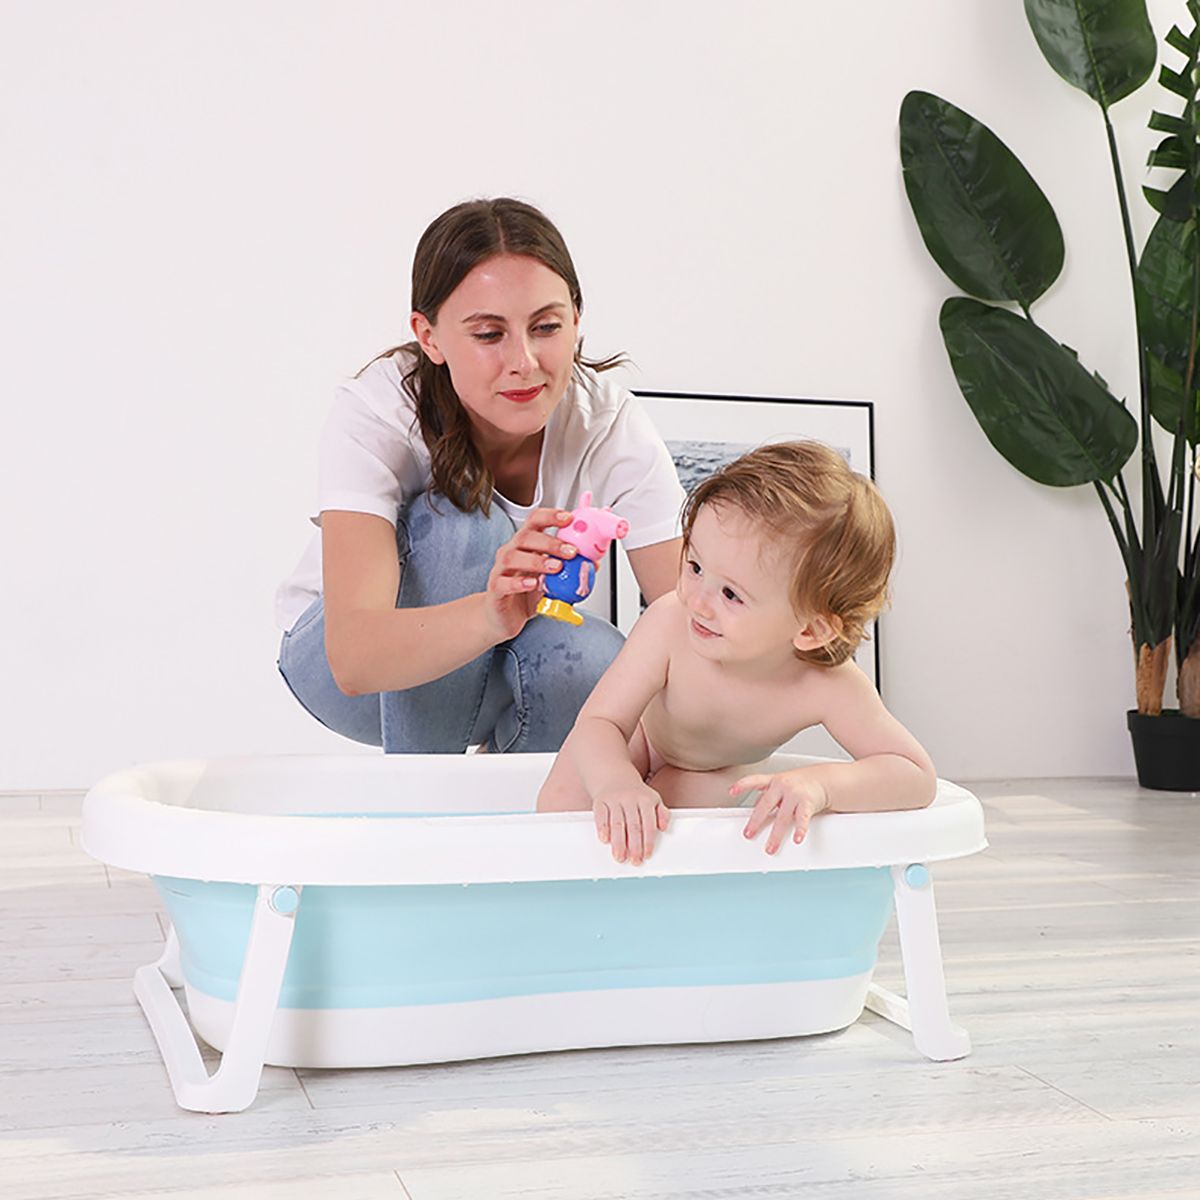 Baby-Tub-Children-Folding-Basin-Baby-Infant-Newborn-Supplies-Portable-Bathtub-7685CM-1571565